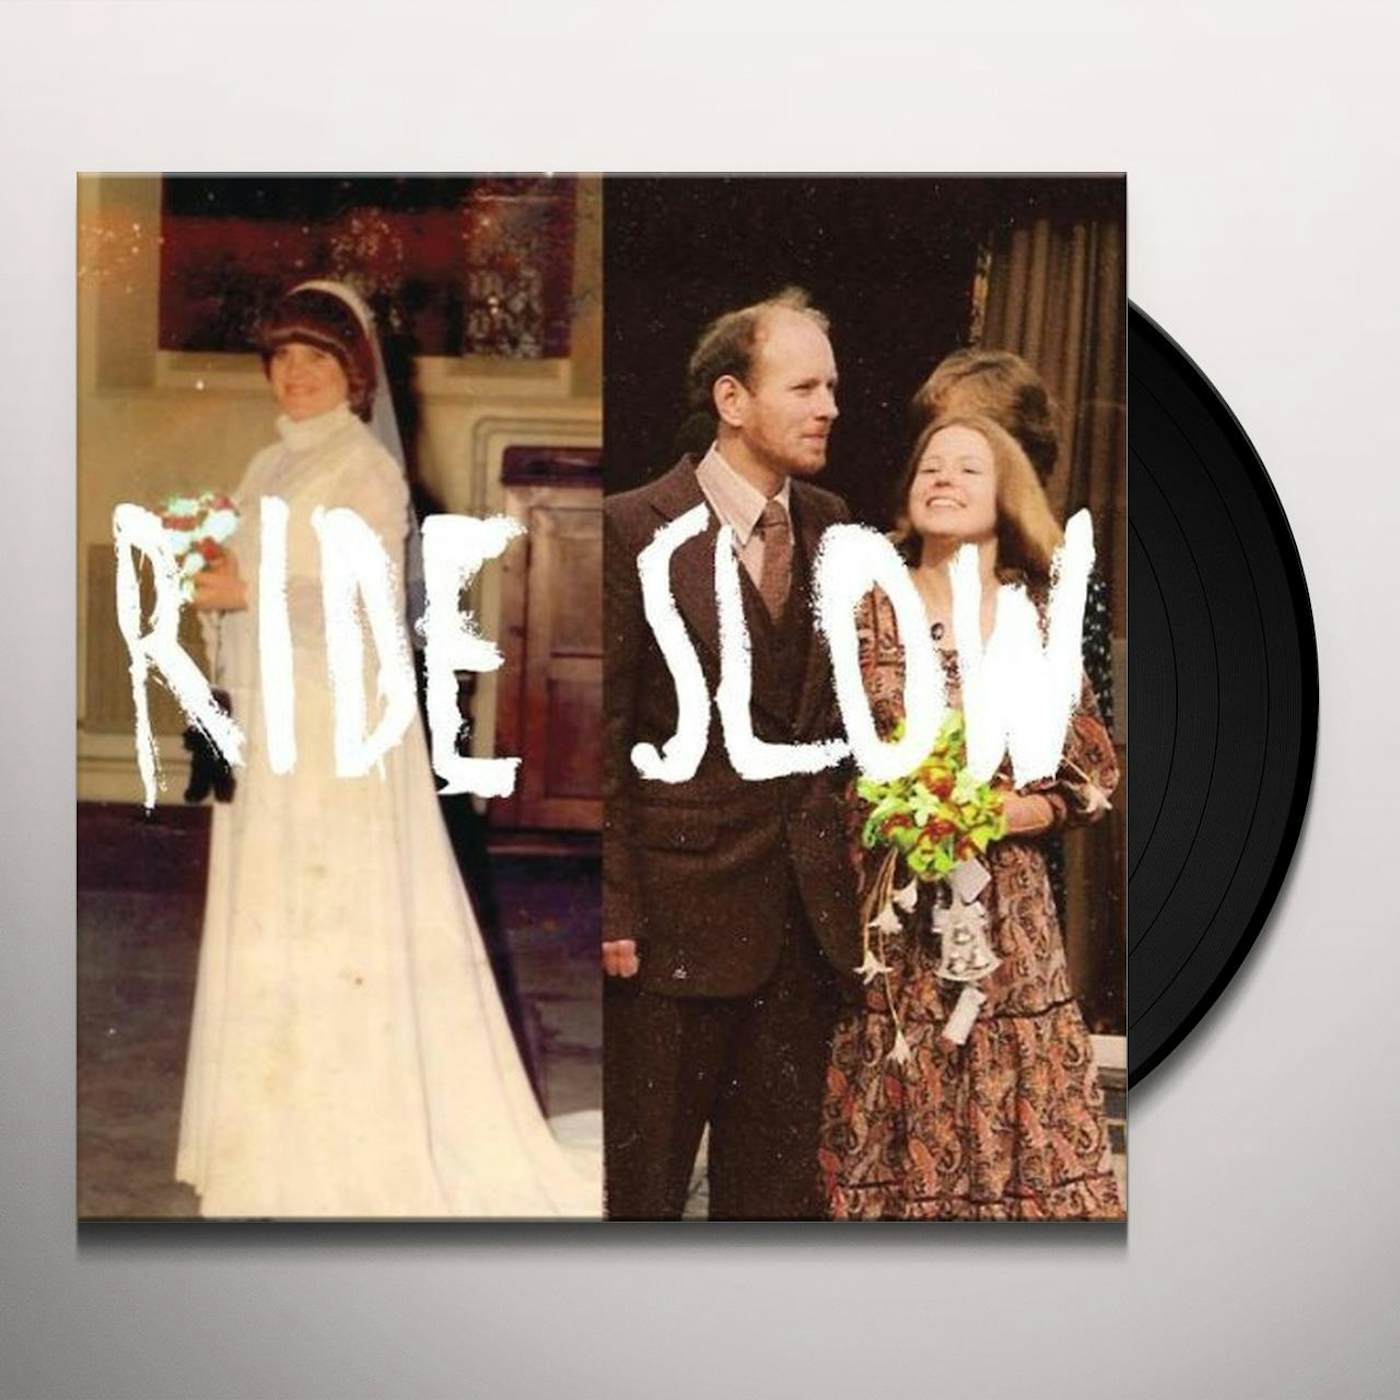 Gentle Friendly Ride Slow Vinyl Record